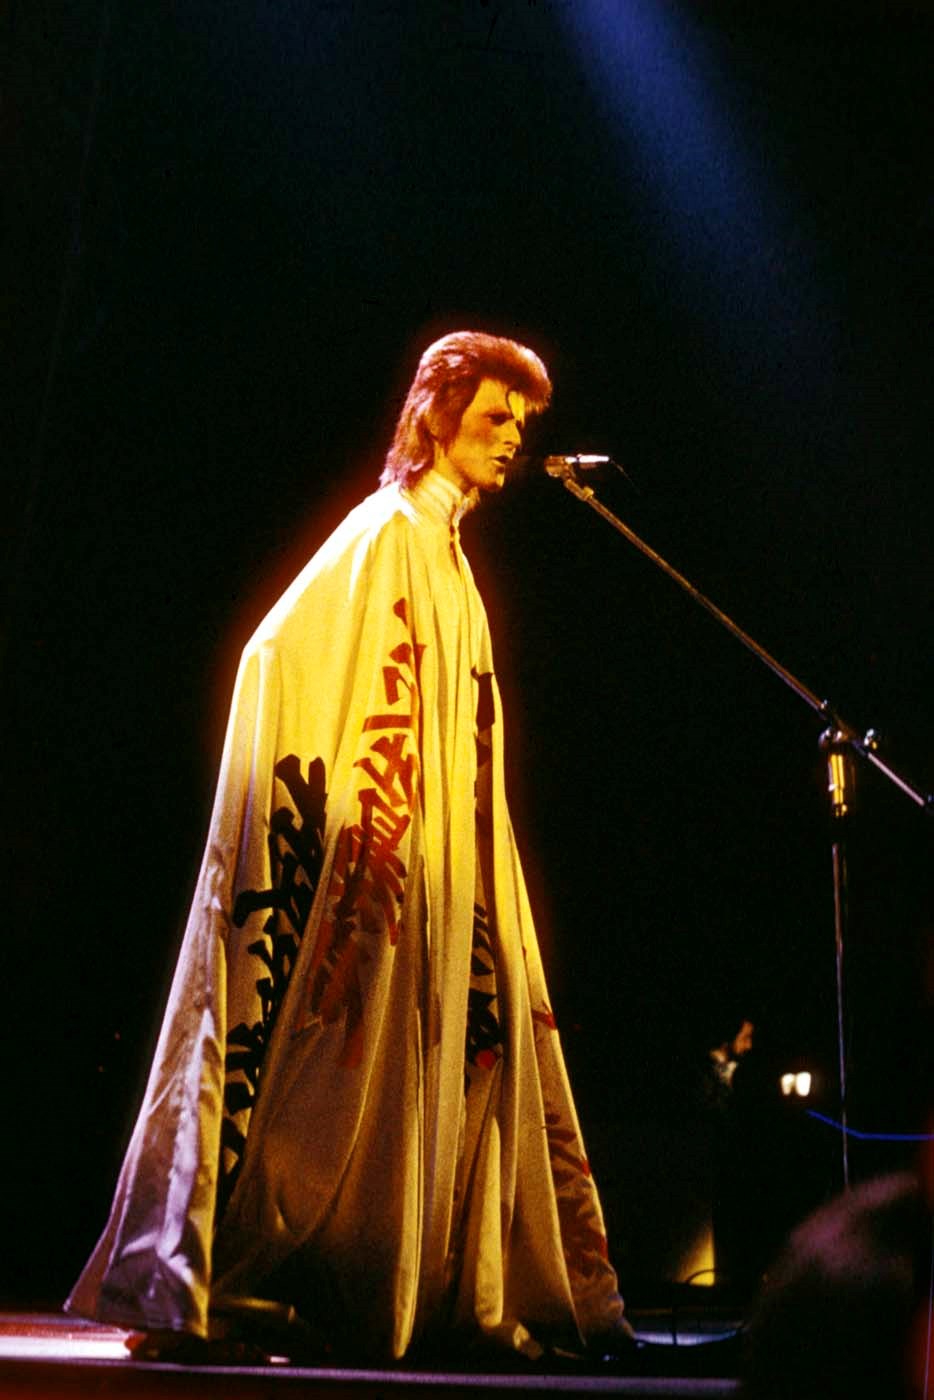 David Bowie in 1973